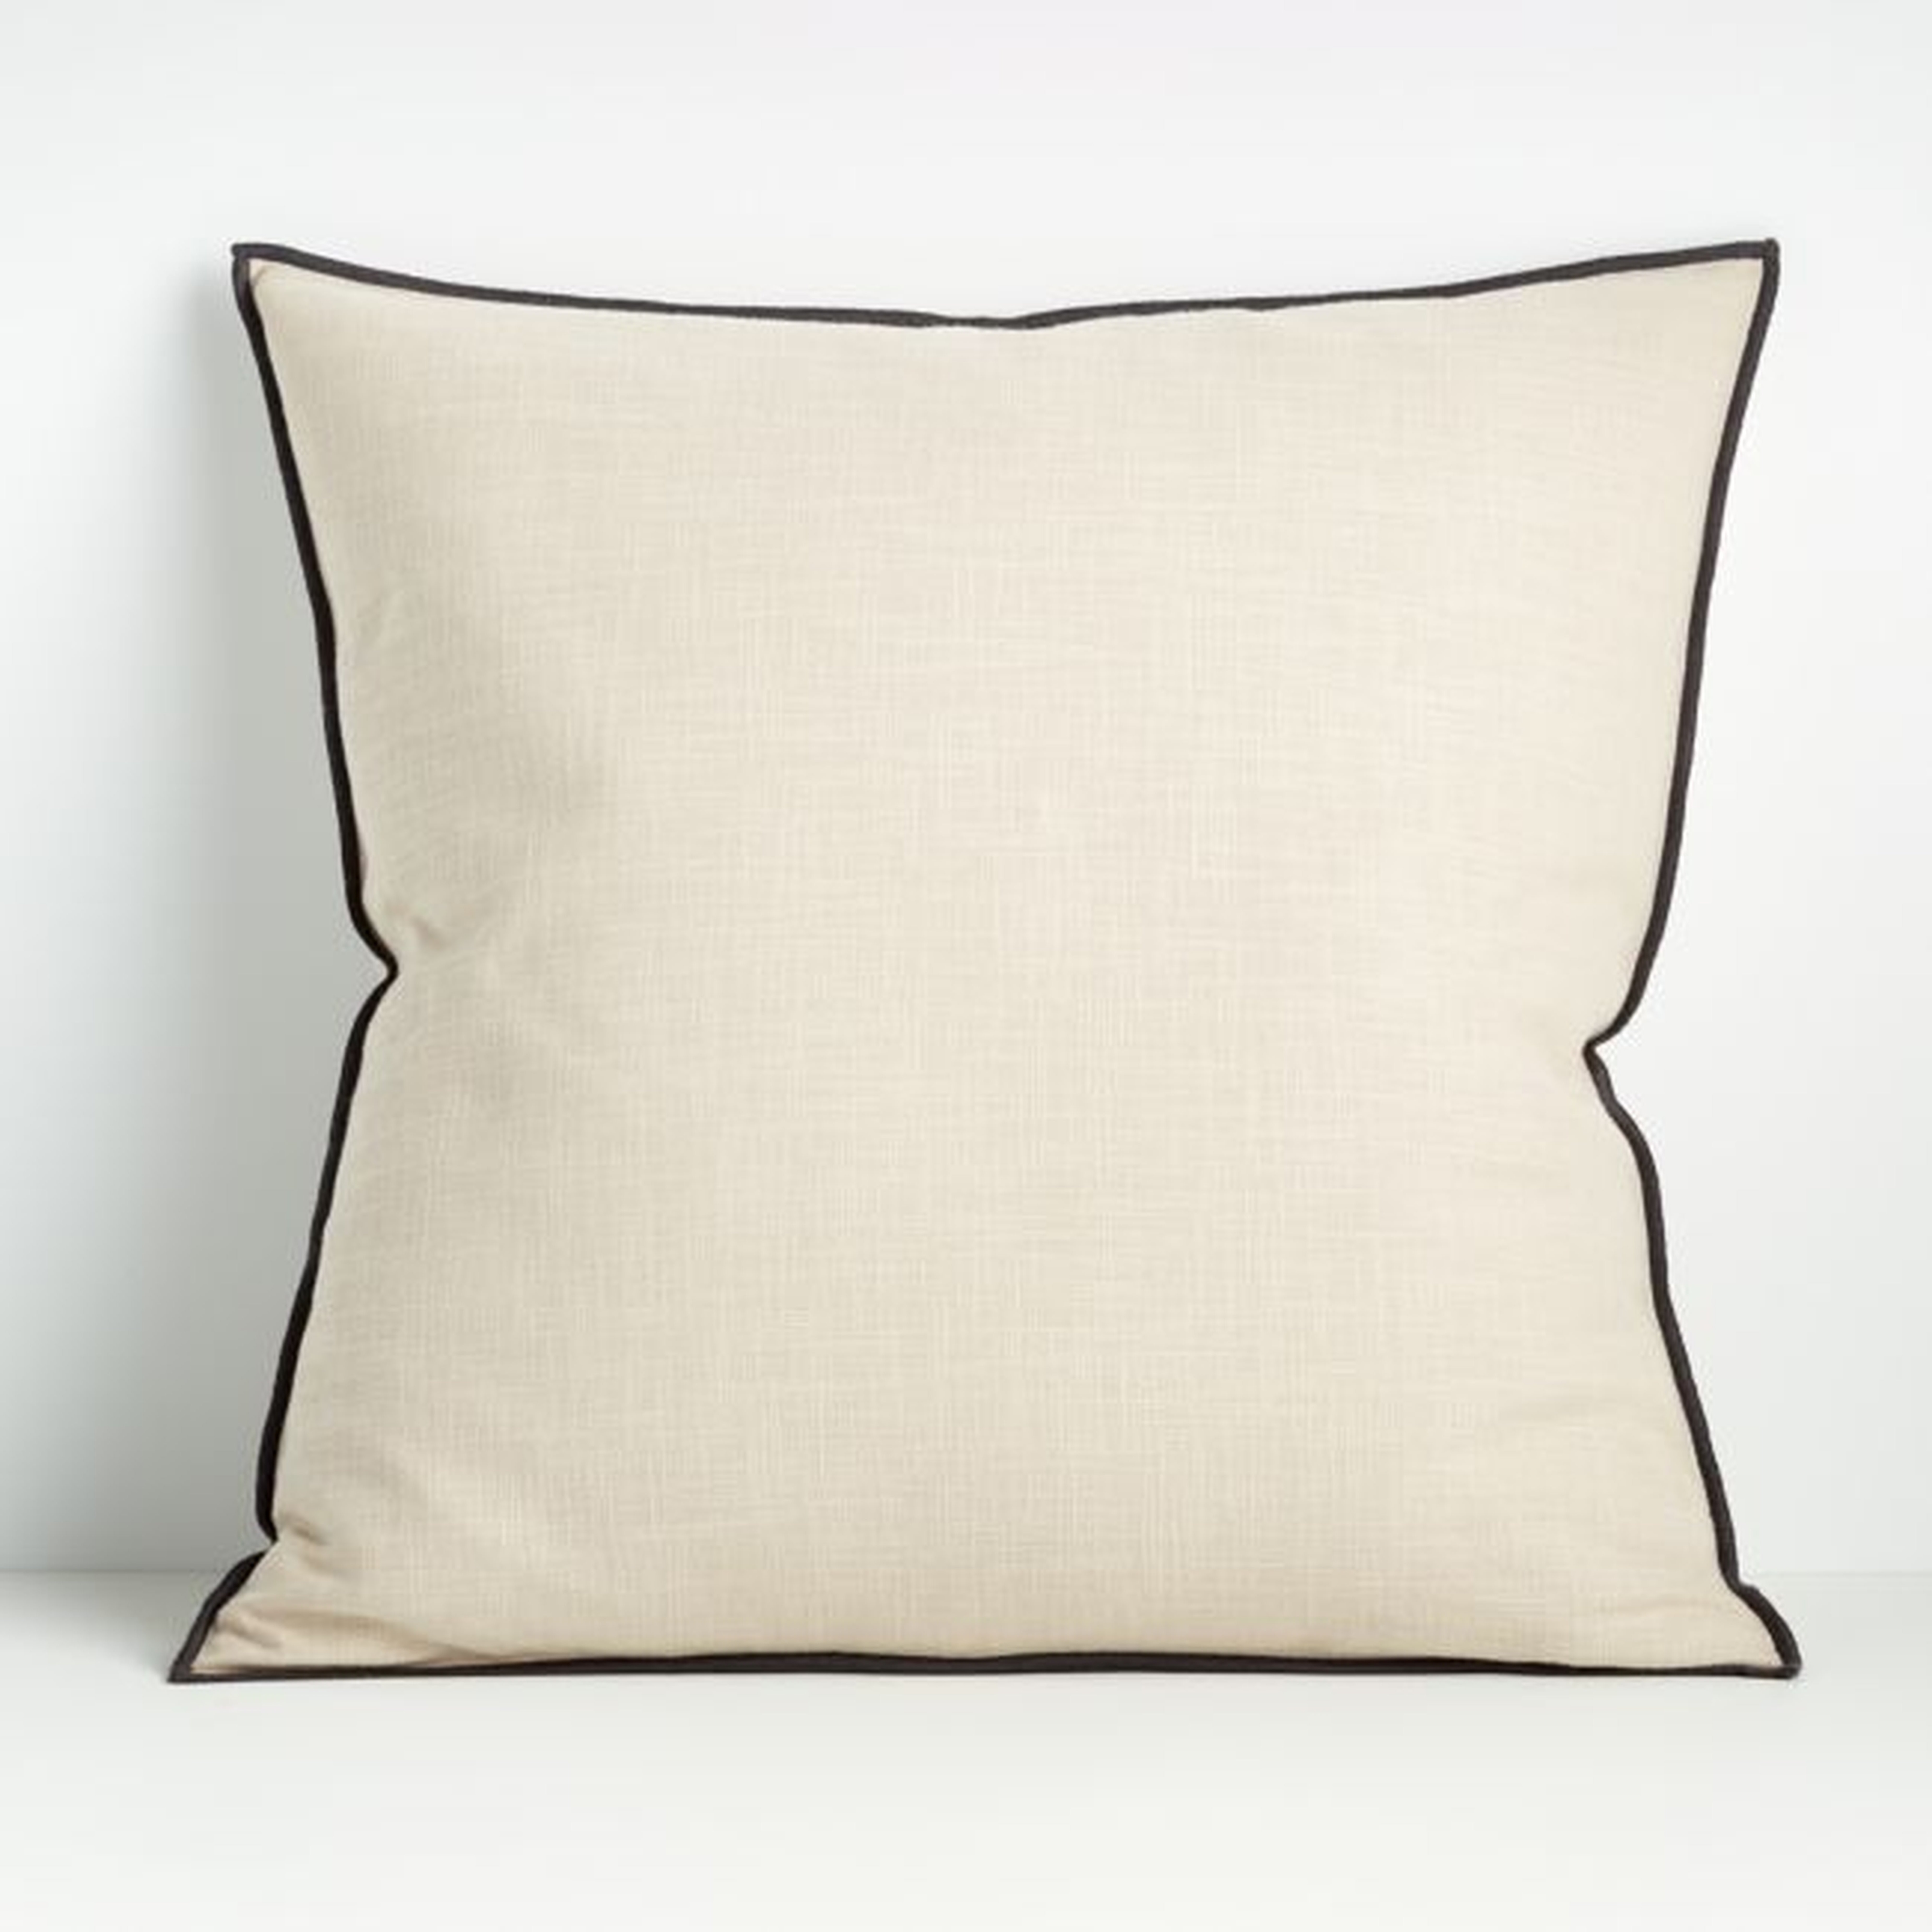 Merrow Stitch Cotton Pillow with Down-Alternative Insert, Moonbeam, 23" x 23" - Crate and Barrel